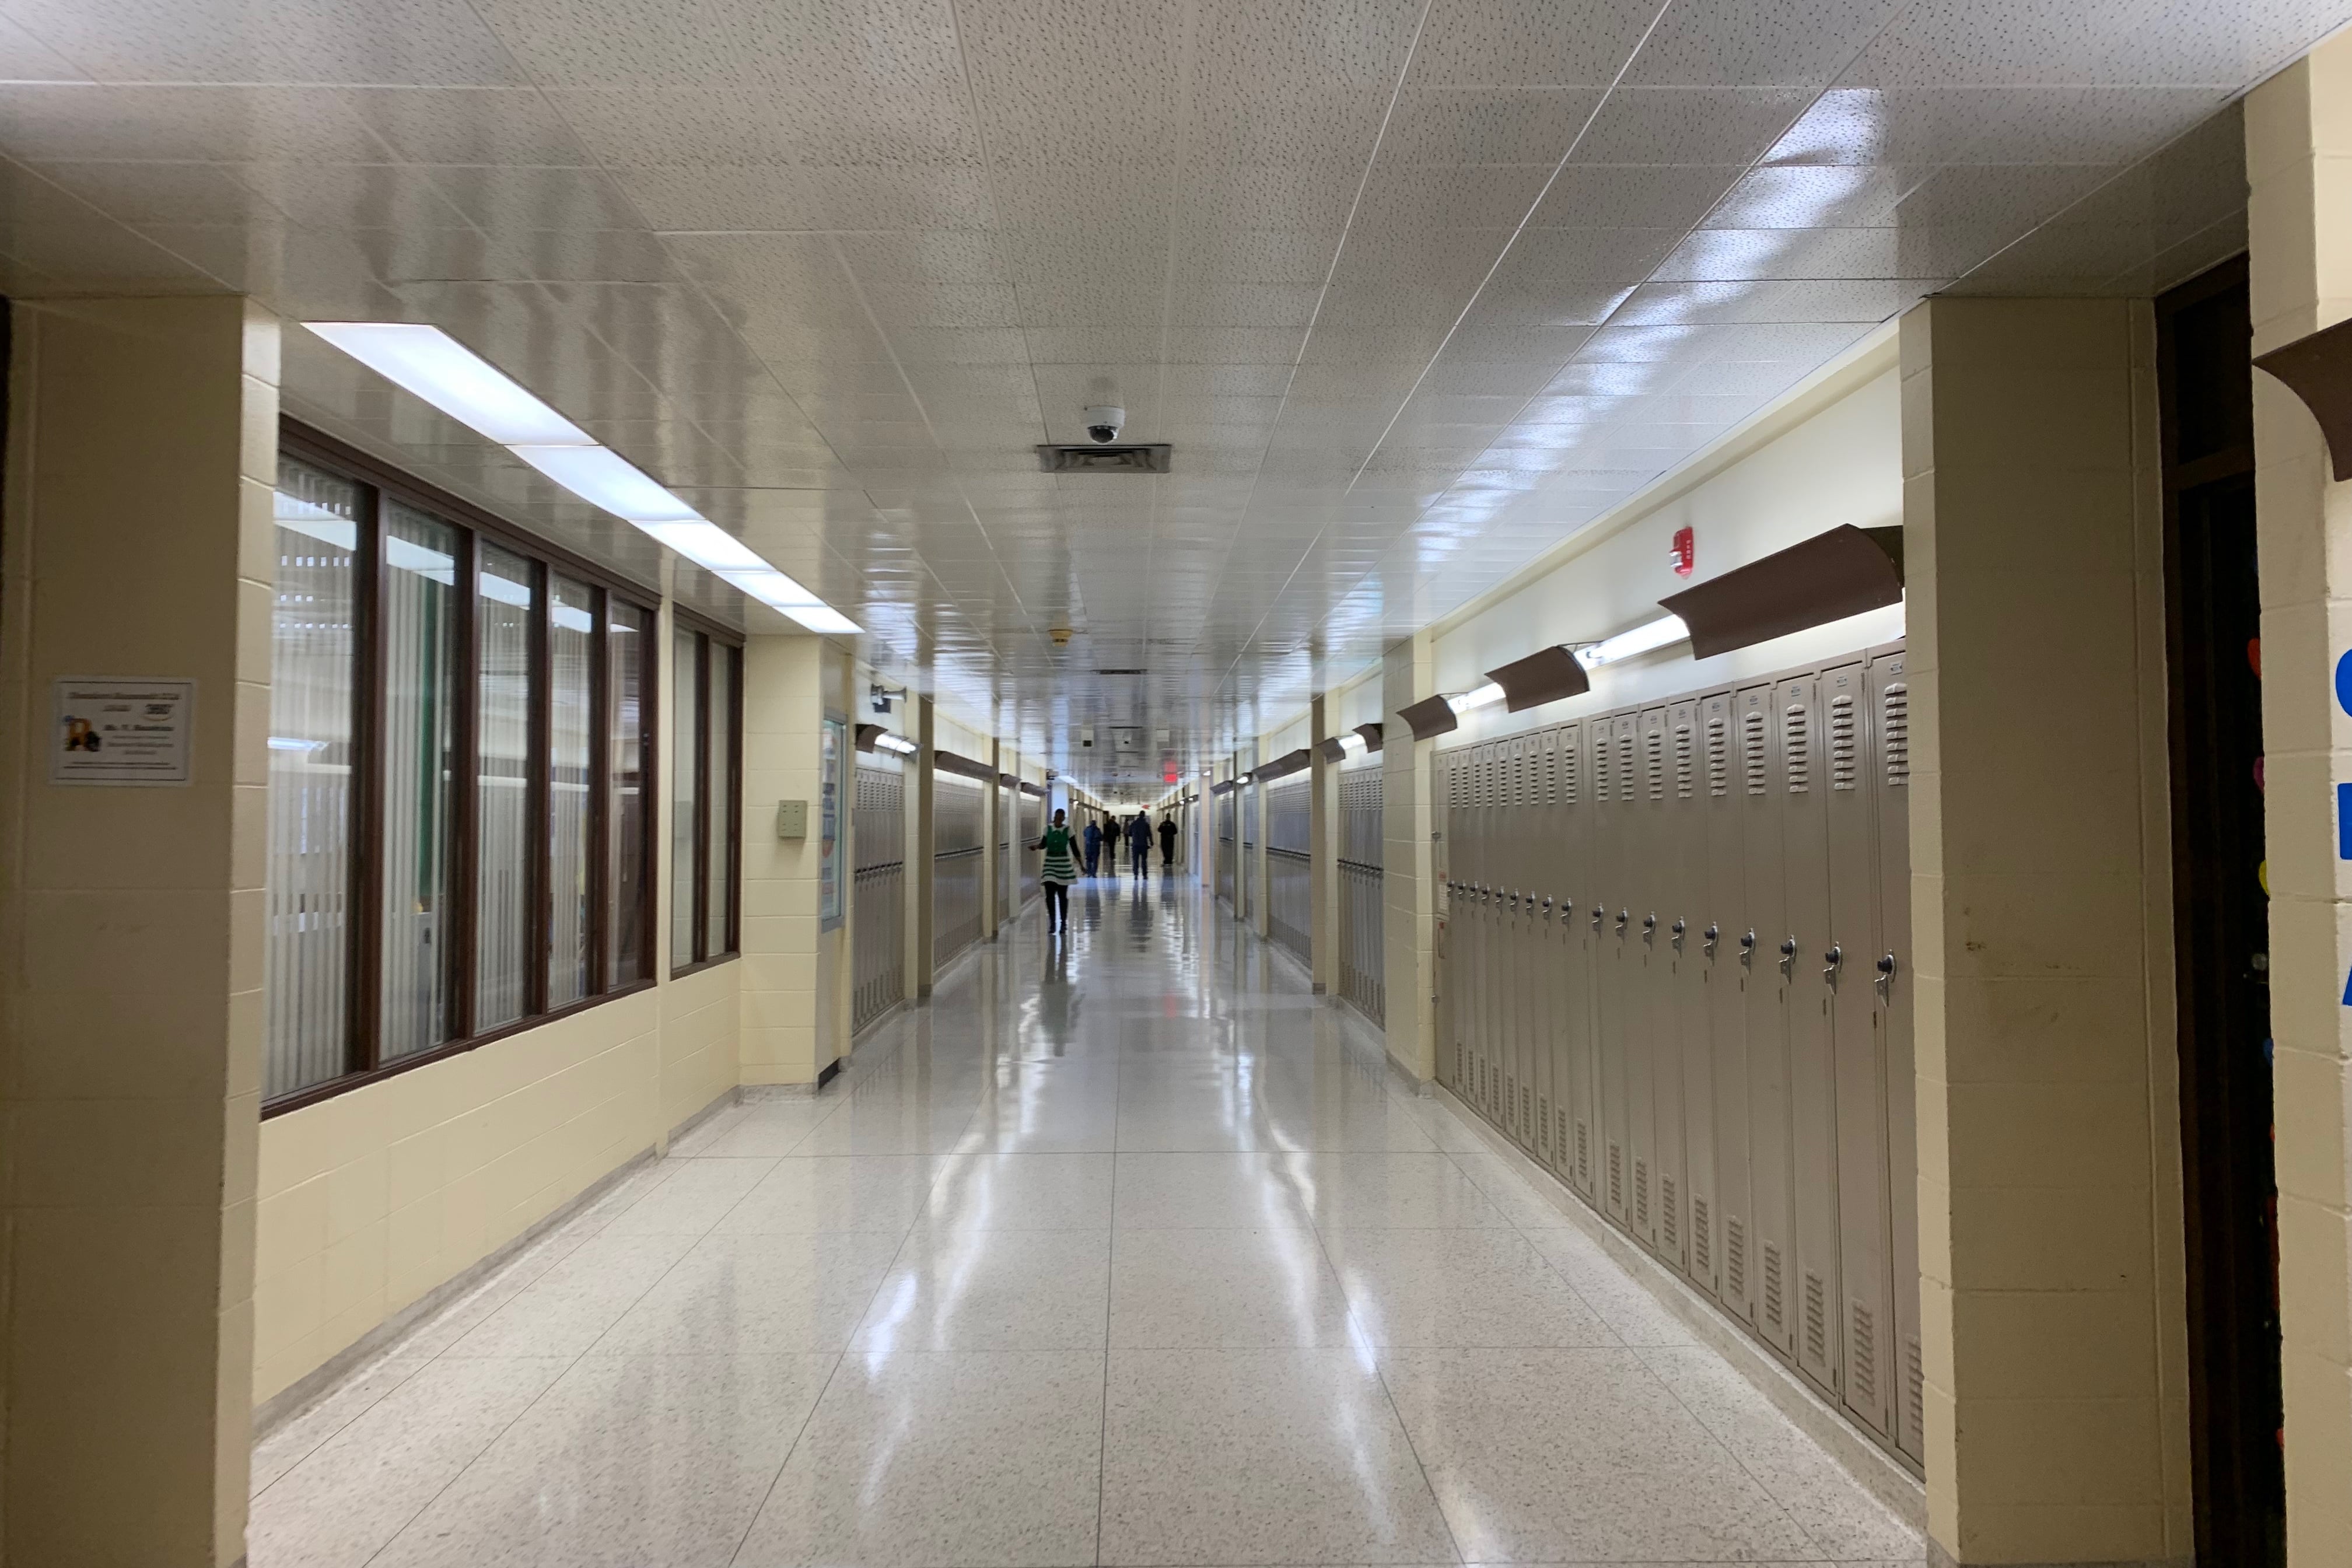 A long, empty hallway in Gary Area Career Center.